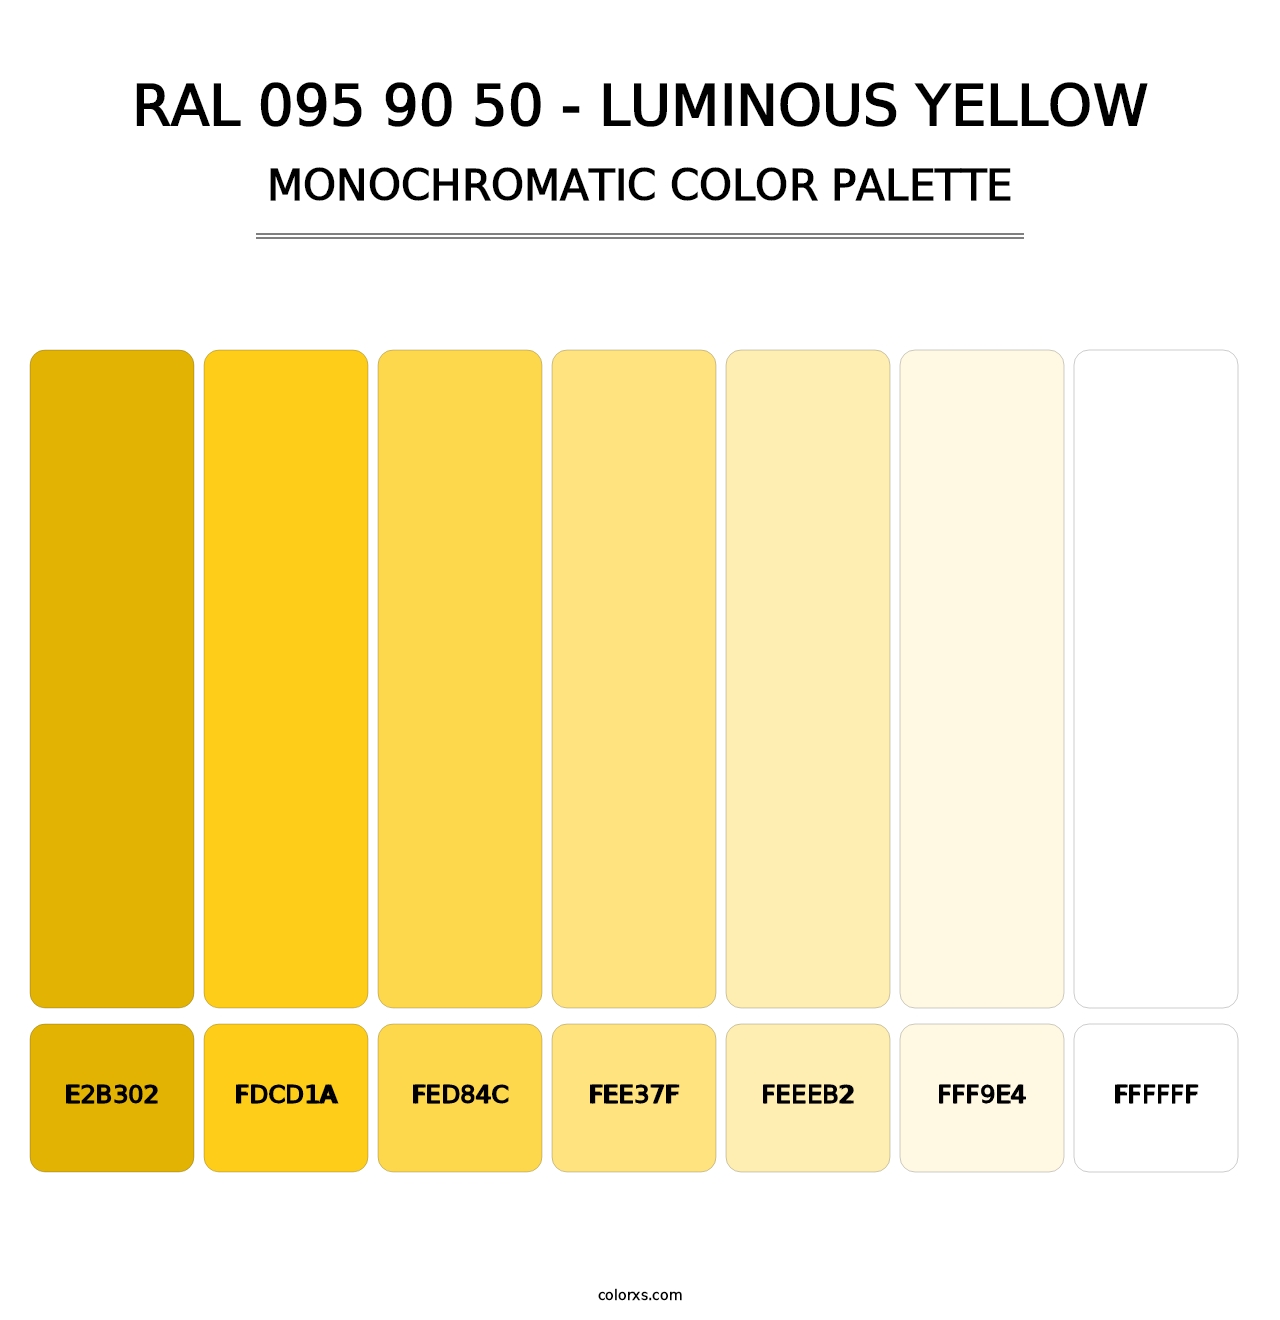 RAL 095 90 50 - Luminous Yellow - Monochromatic Color Palette